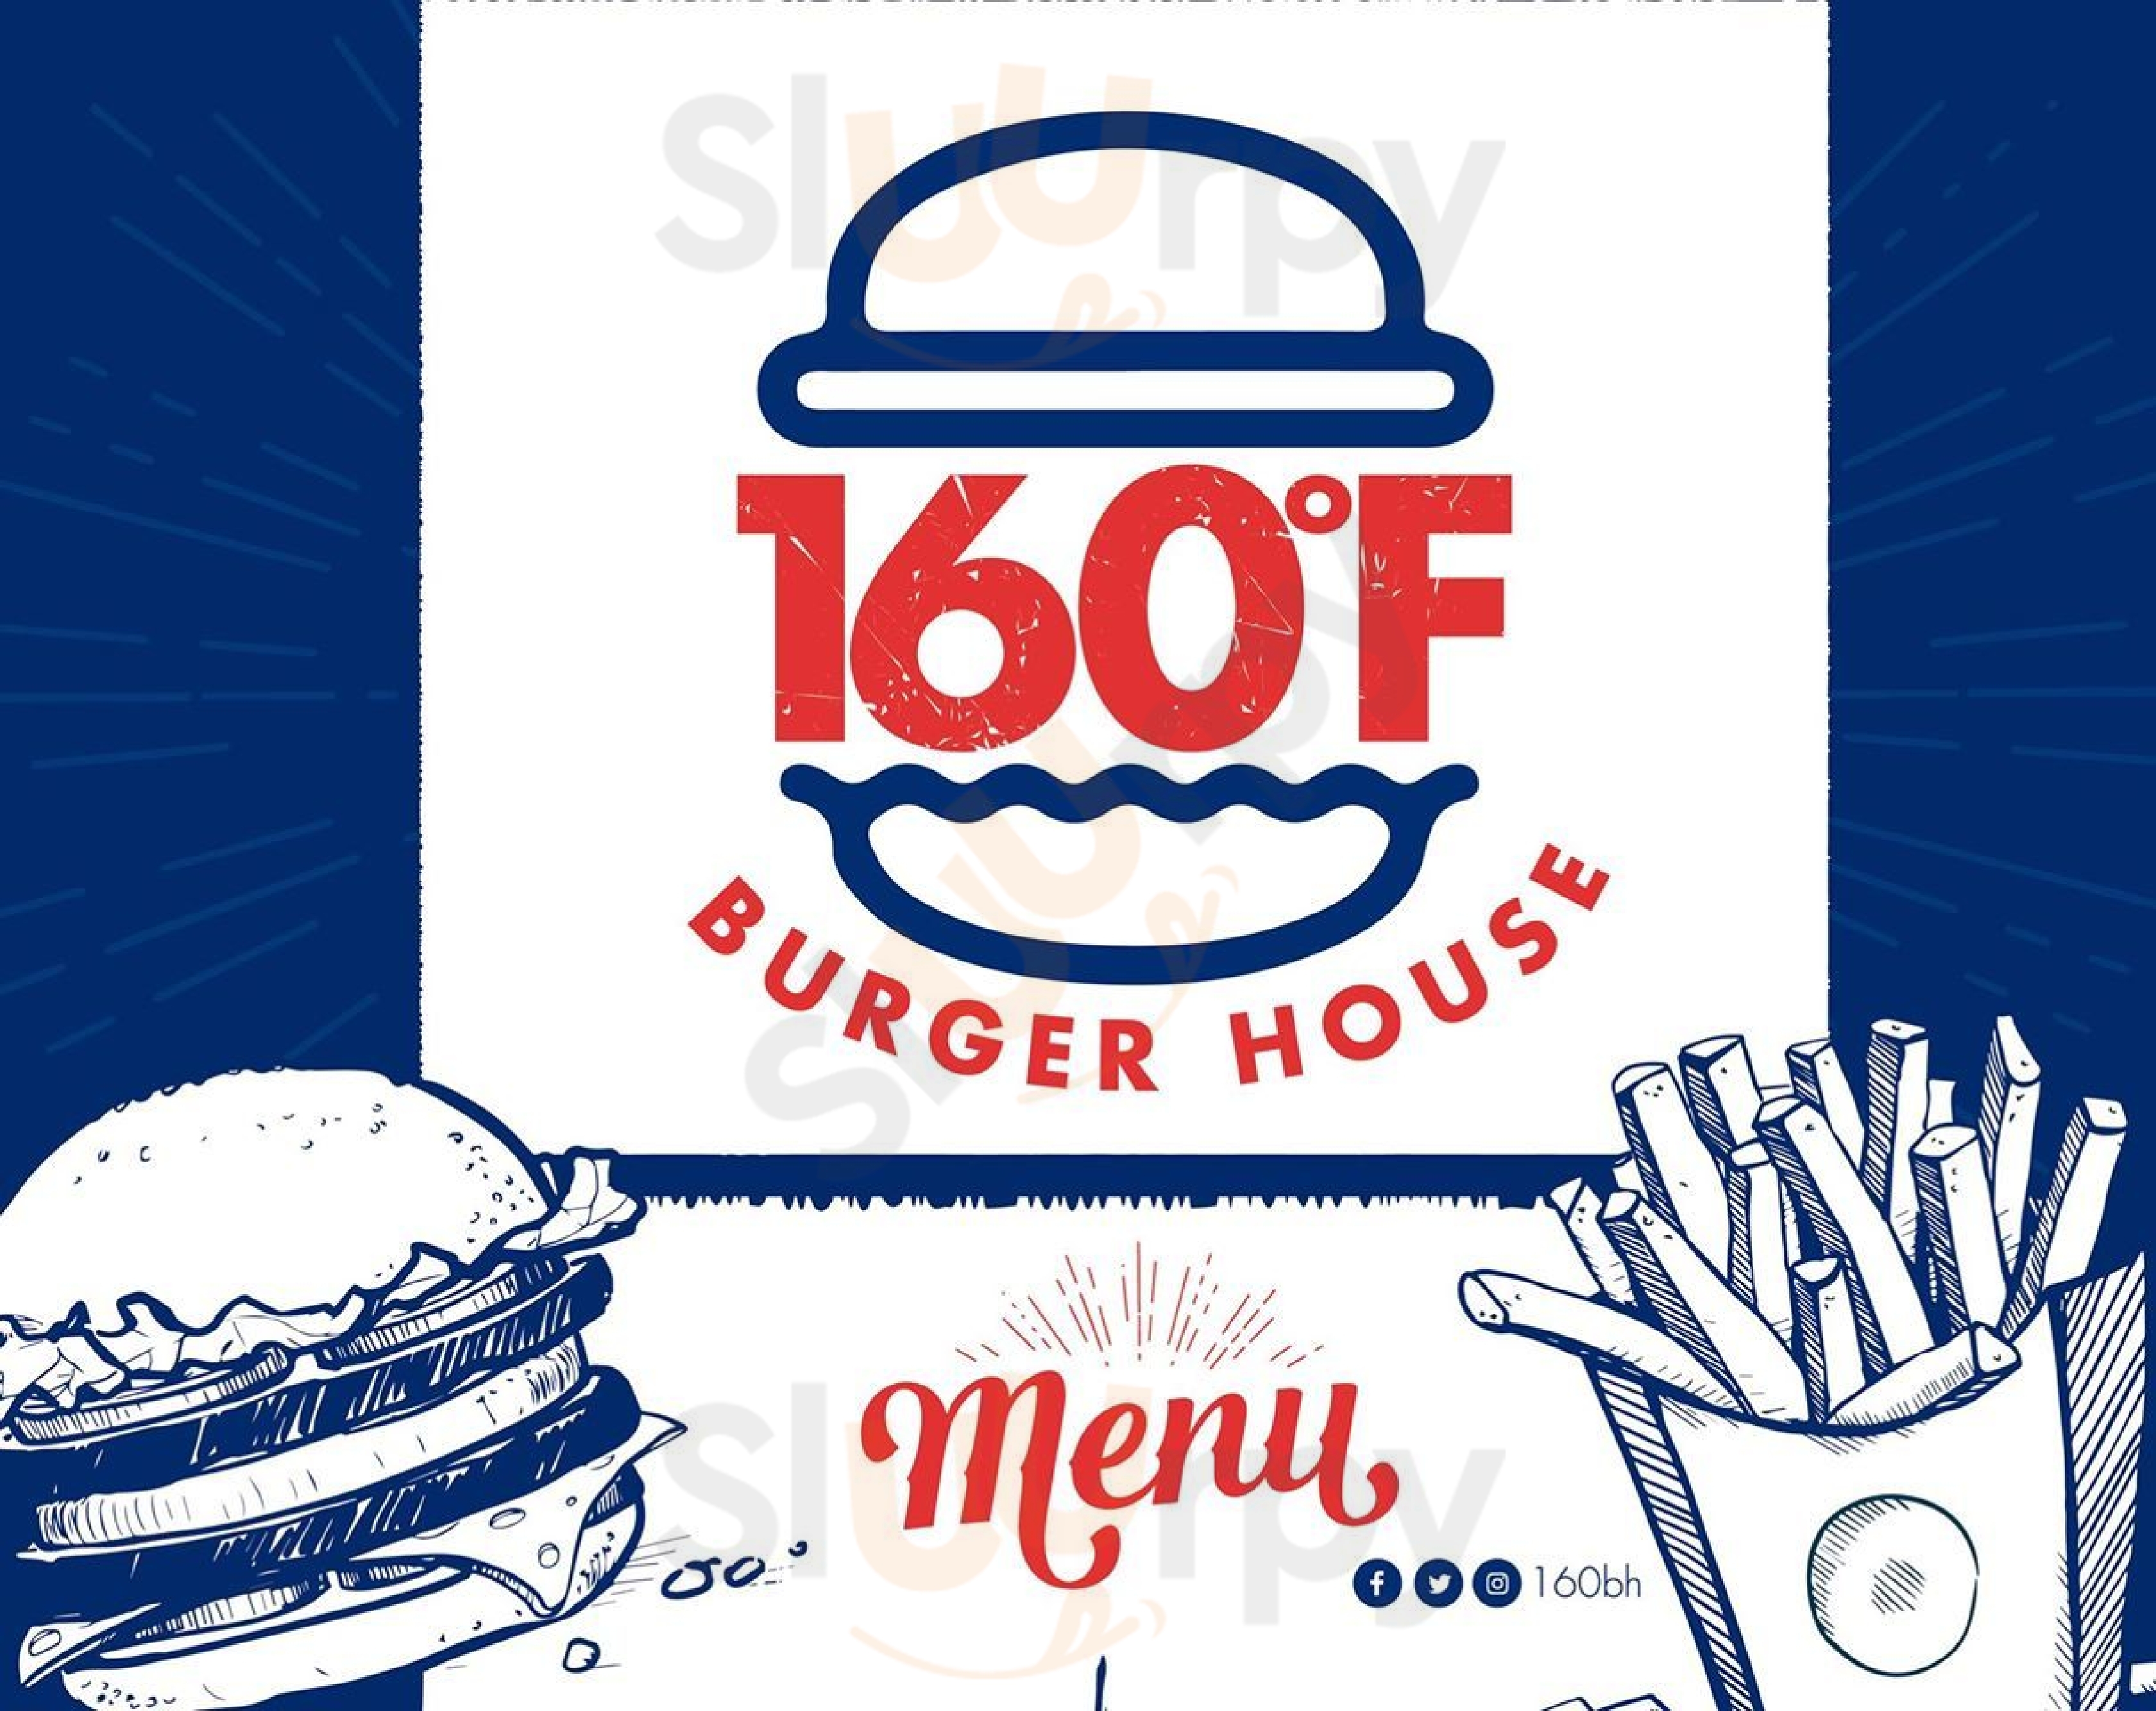 160 F Burger House Cali Menu - 1